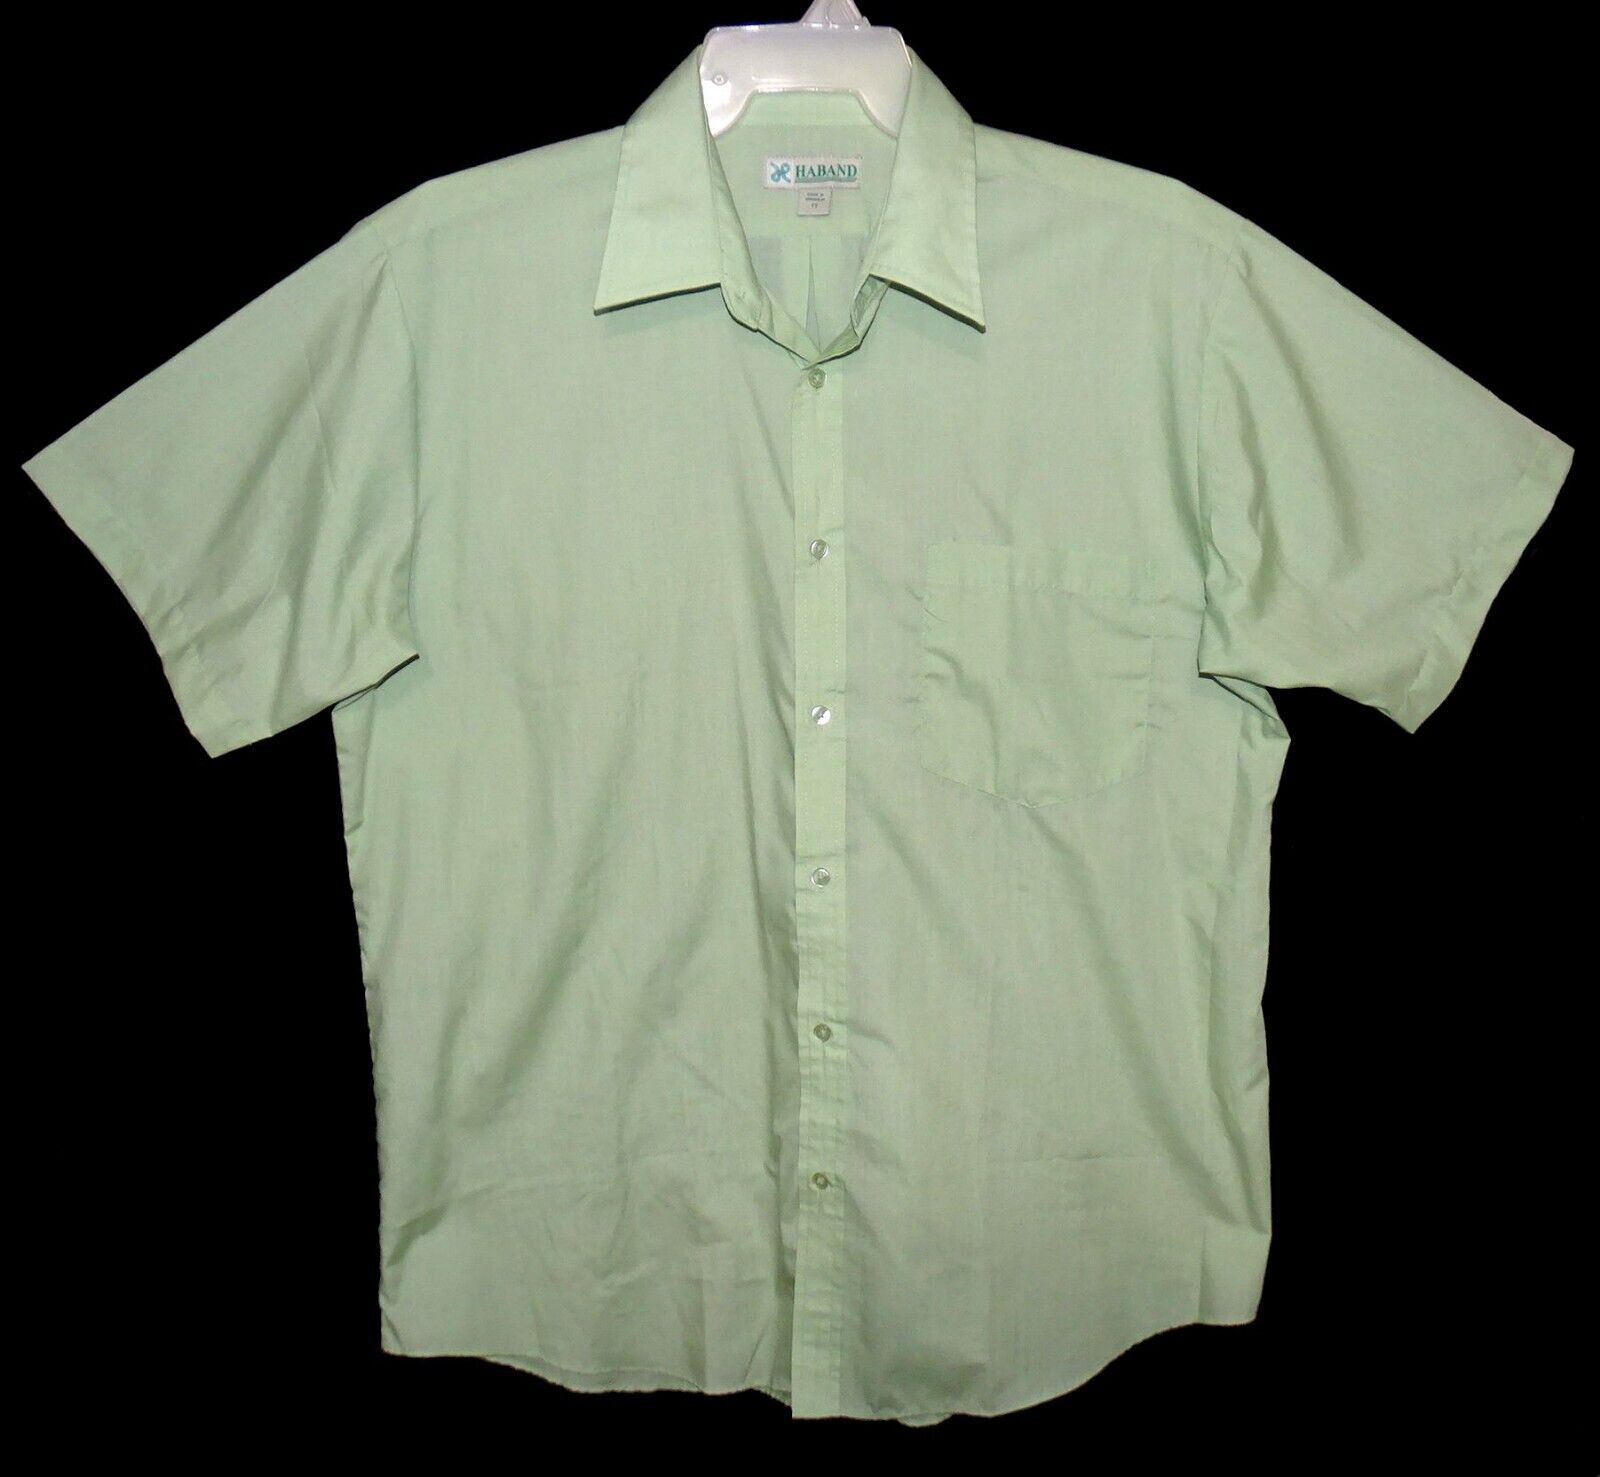 Sz 17 Haband Short Sleeve Dress Shirt Lime Green Poly/Cotton